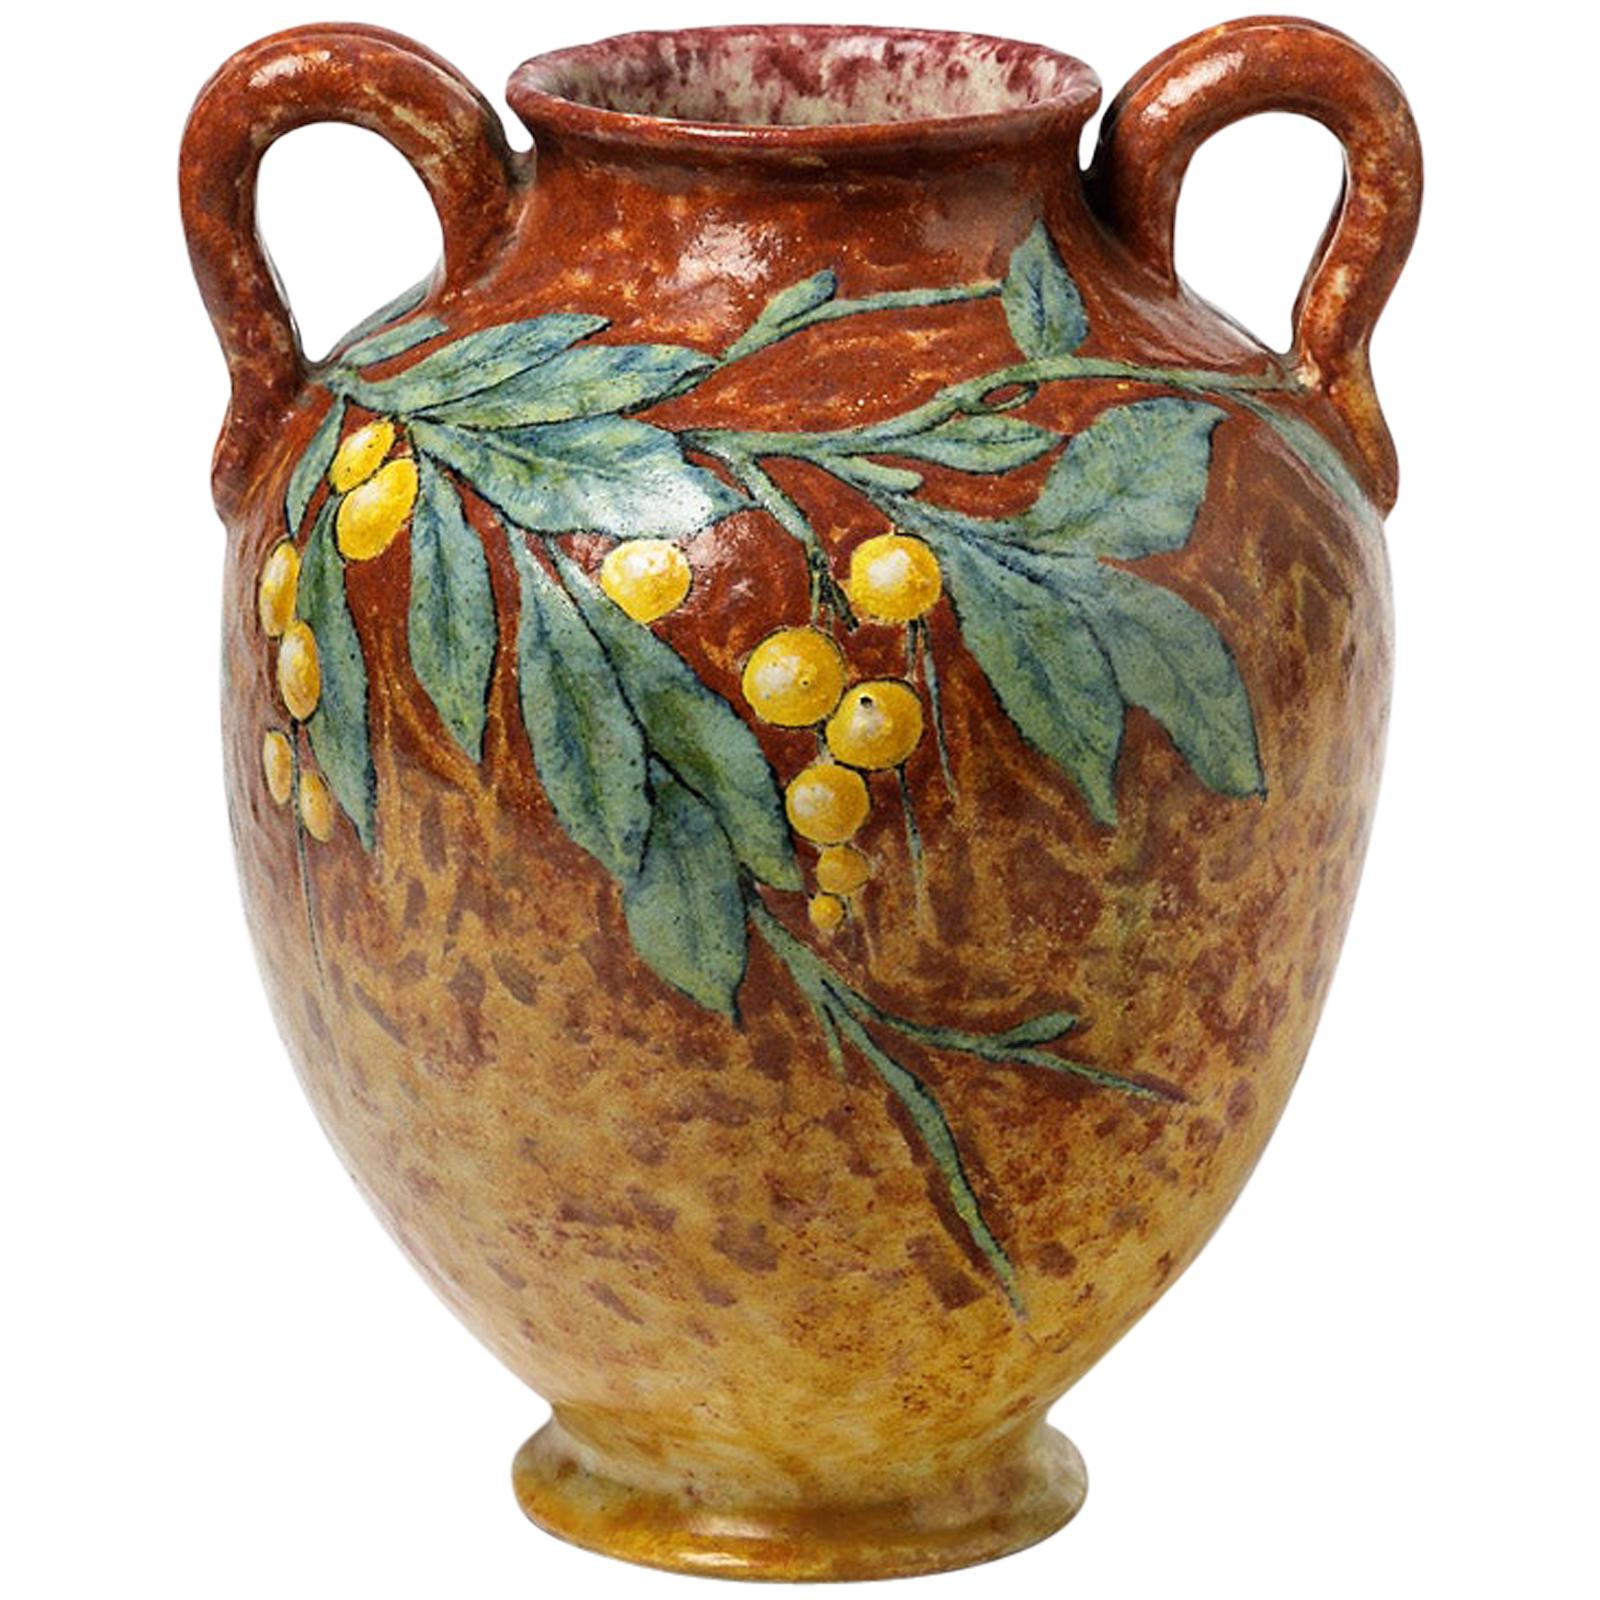 Decorative Classic Stoneware Ceramic Vase by Chaumeil 1912 Orange and Flower